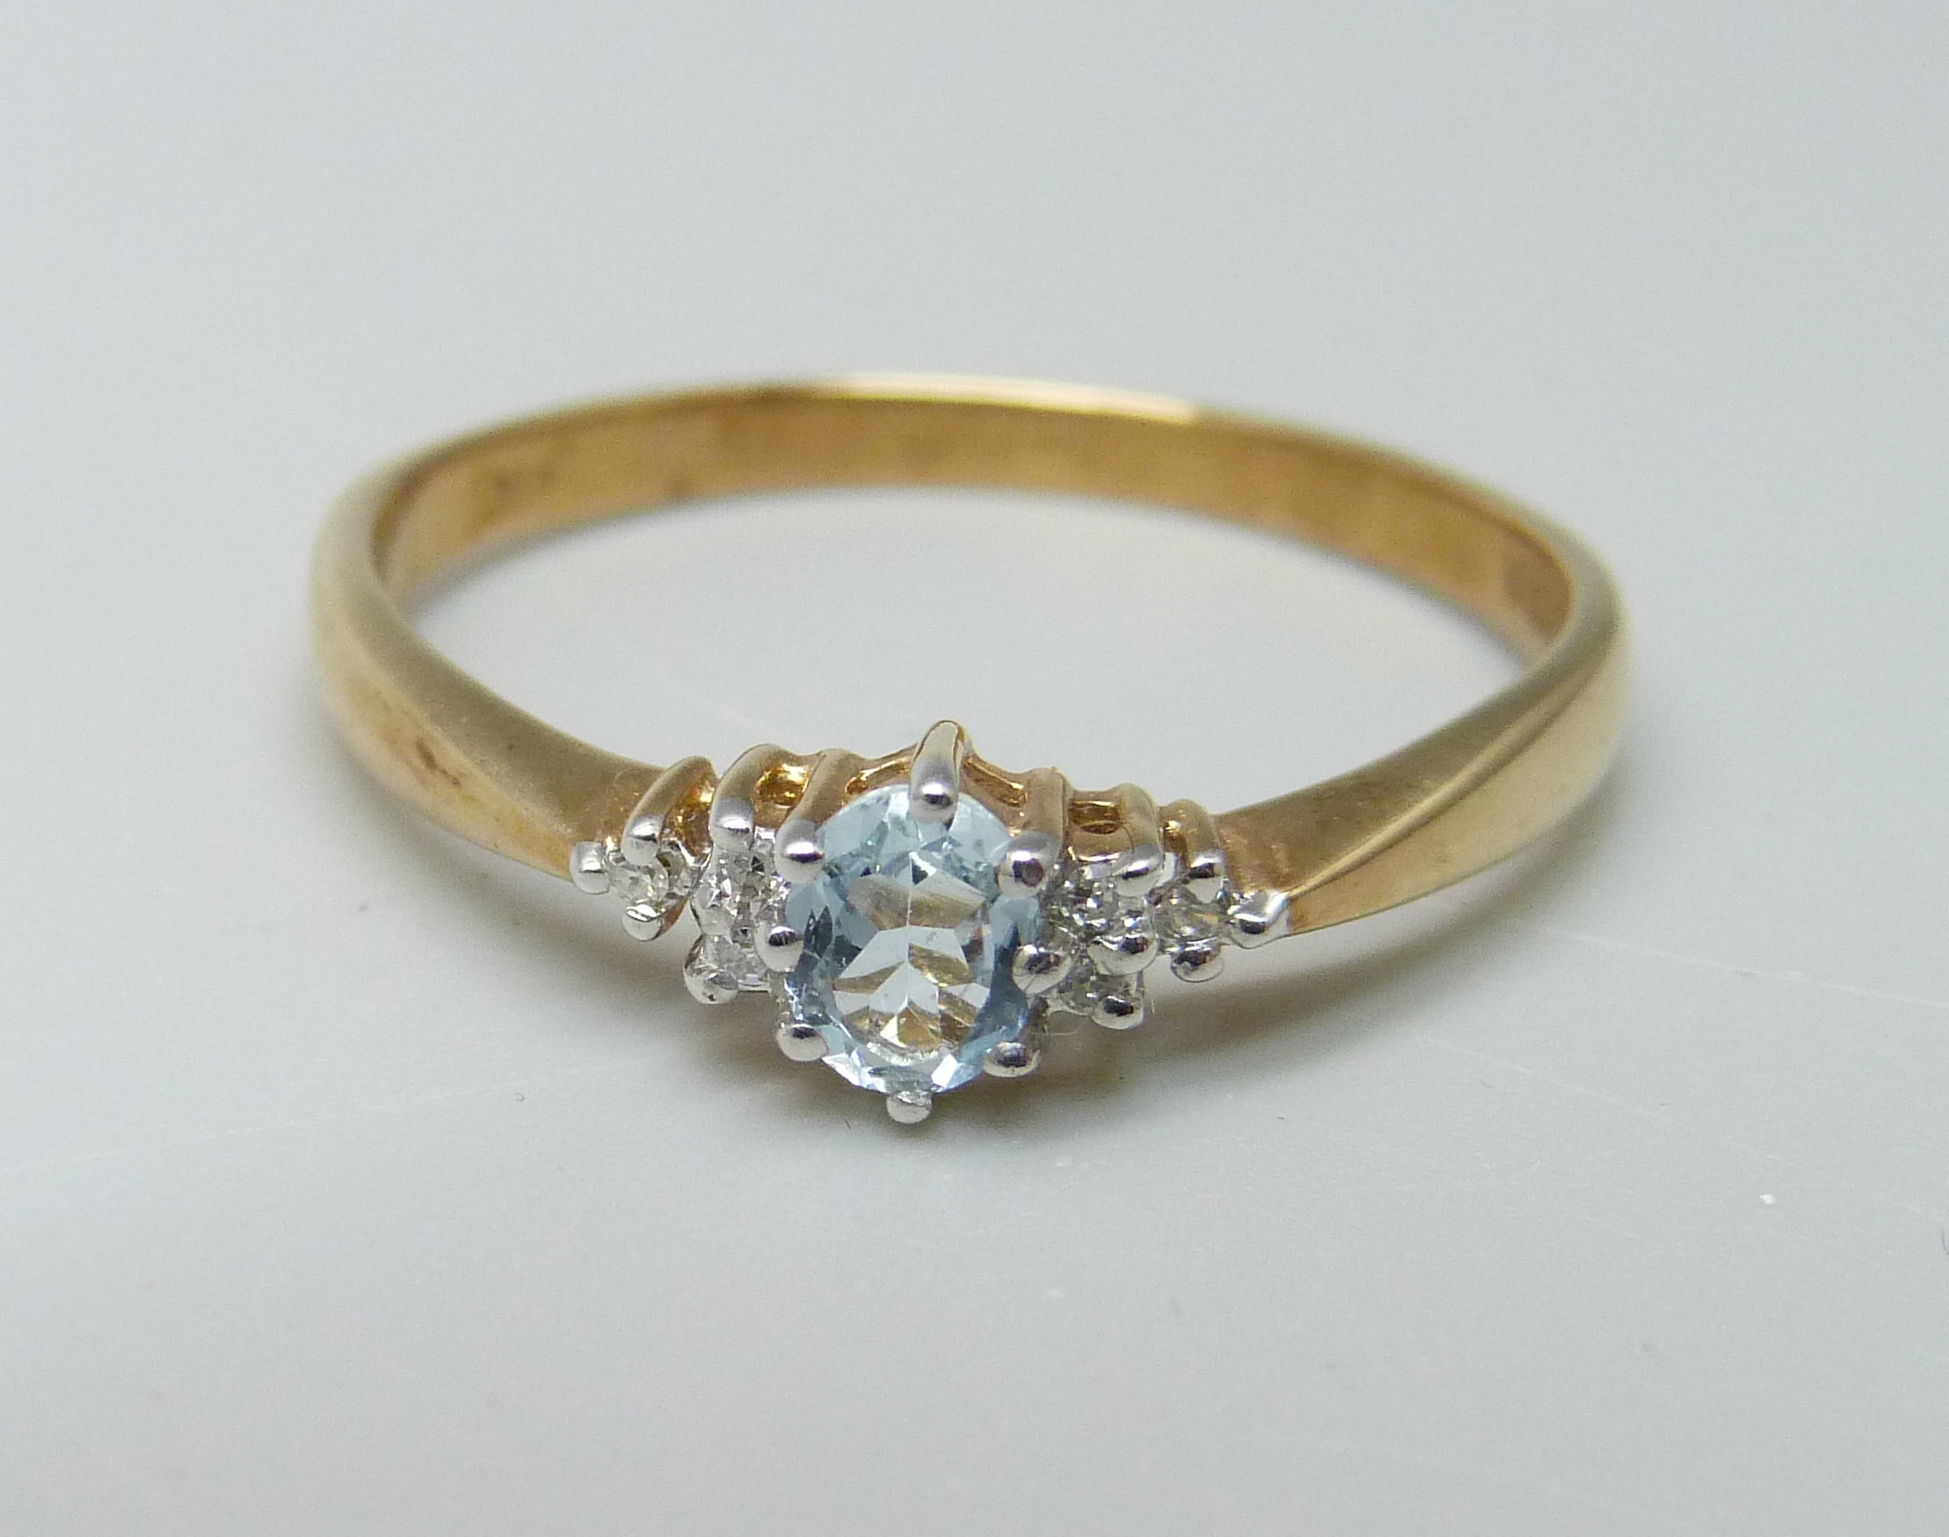 A 9ct gold, aquamarine and diamond ring, 2.5g, Z